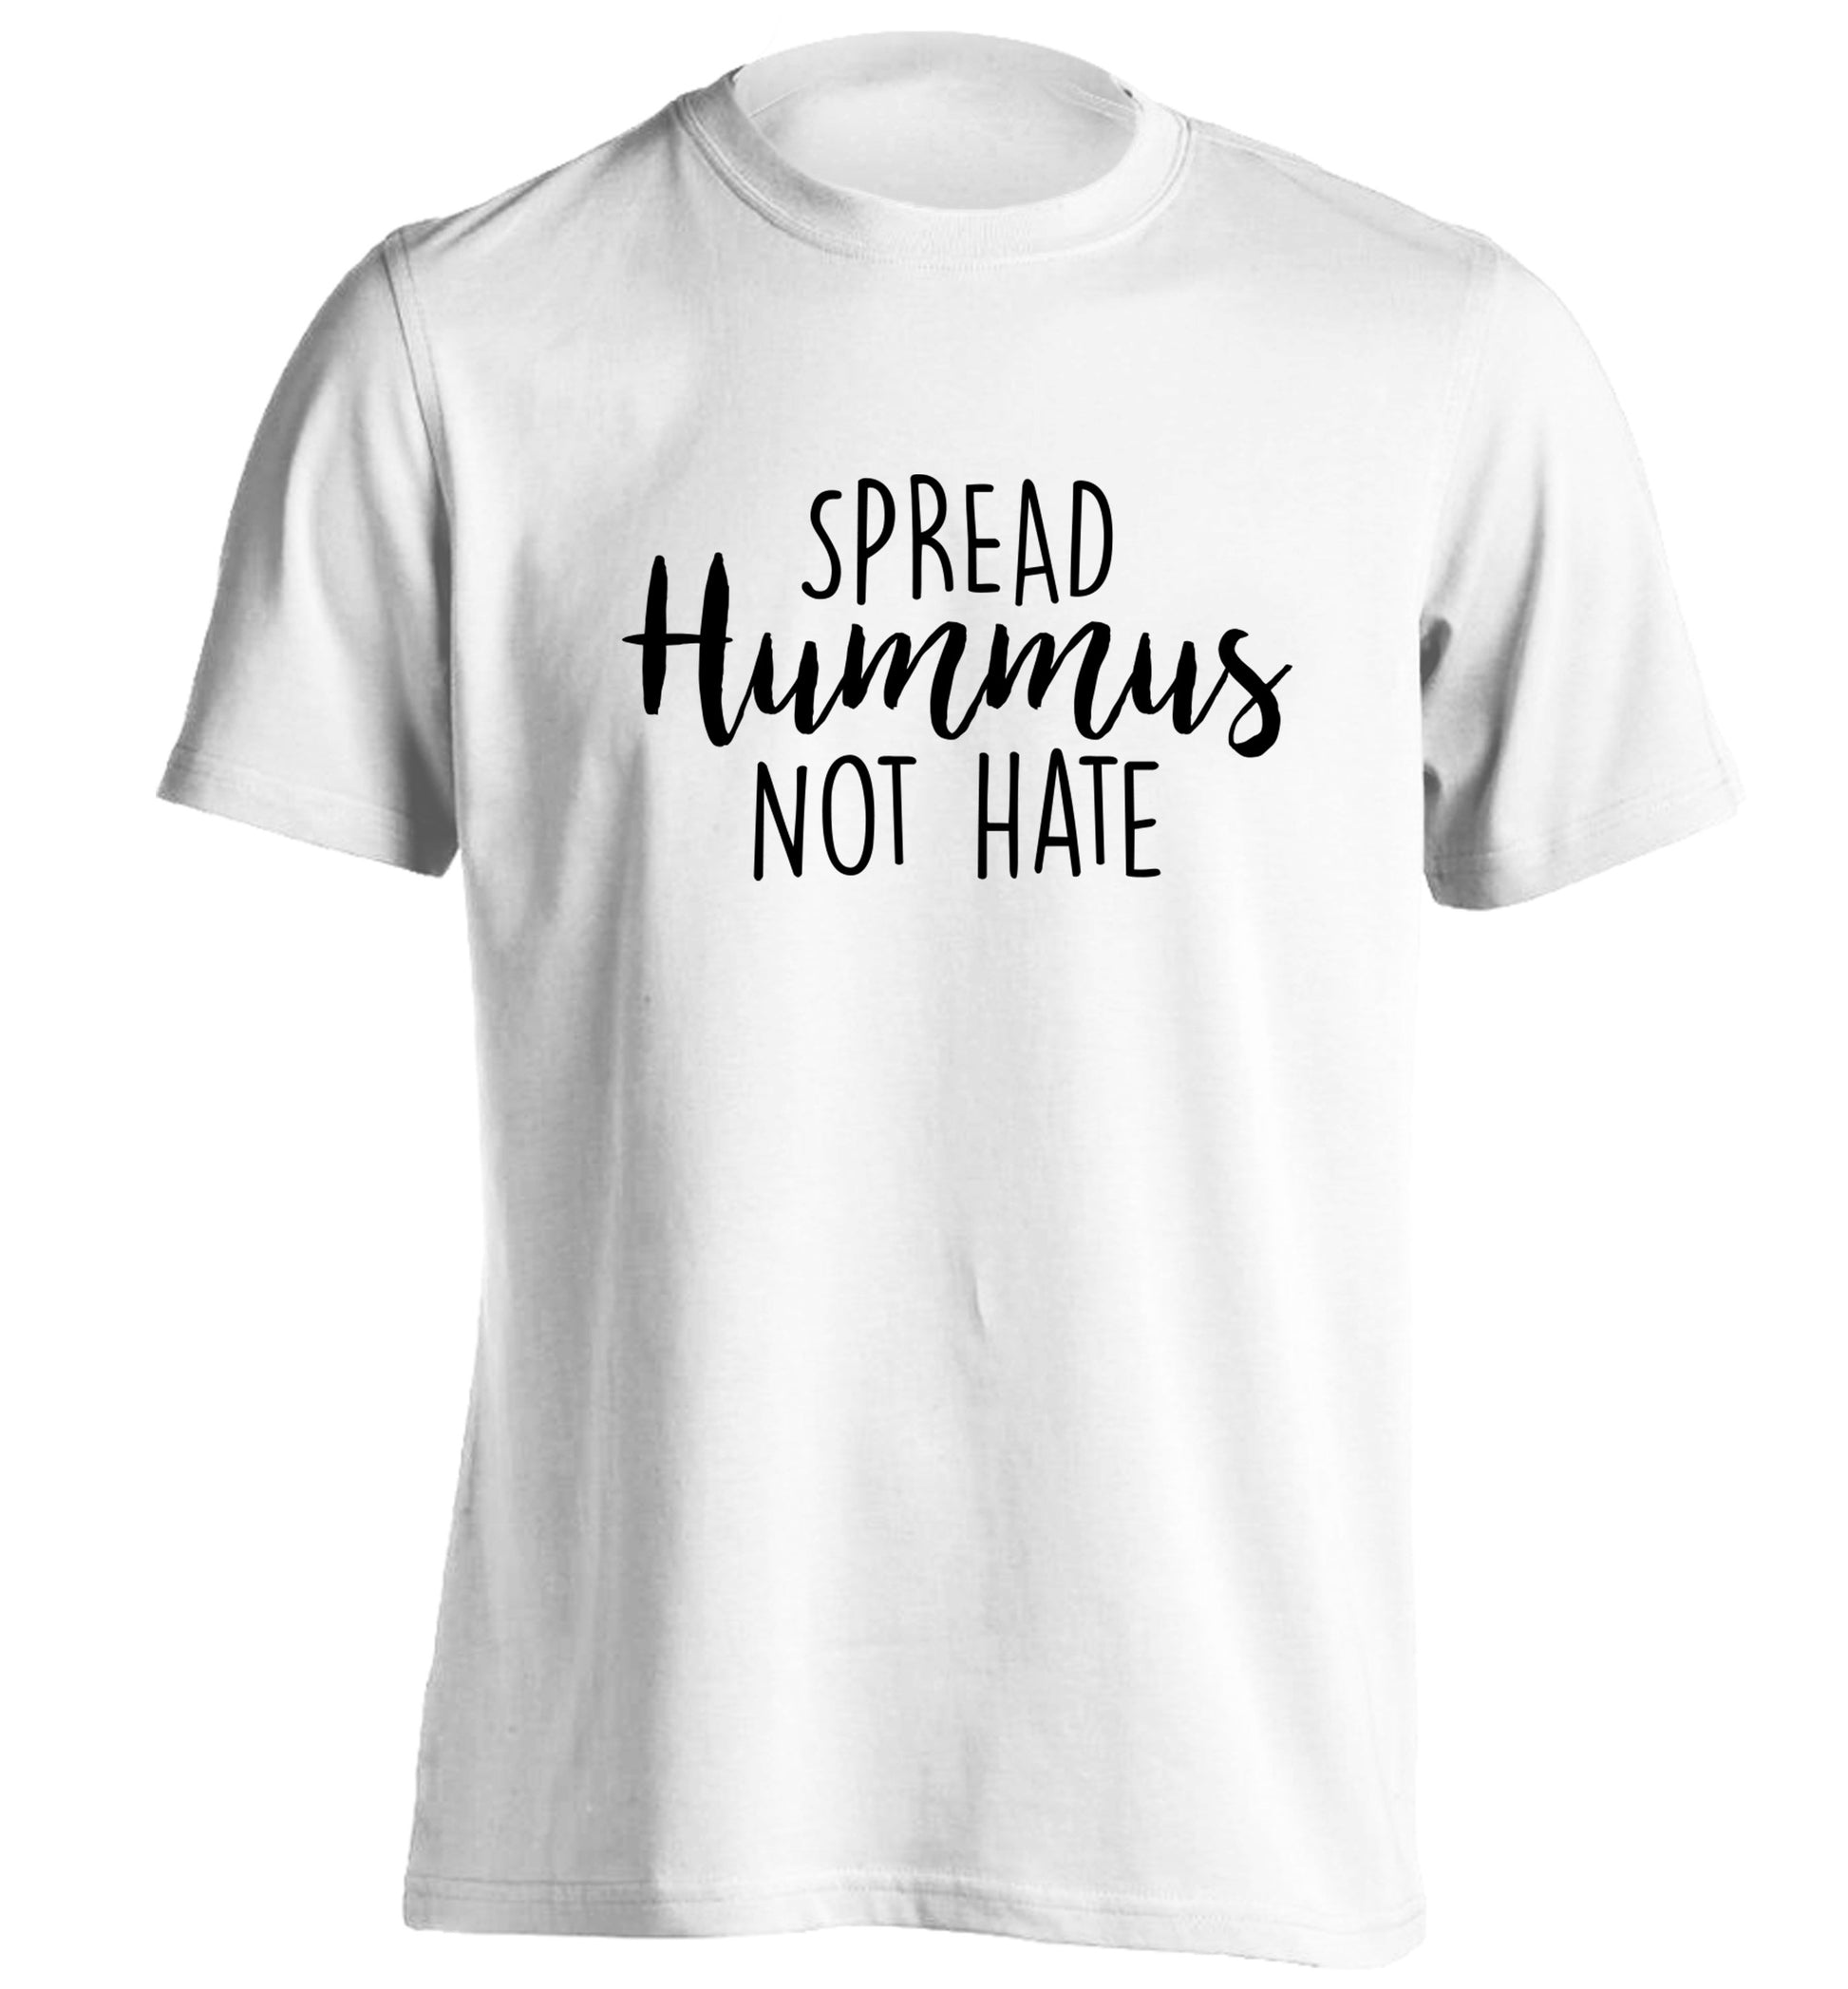 Spread hummus not hate script text adults unisex white Tshirt 2XL